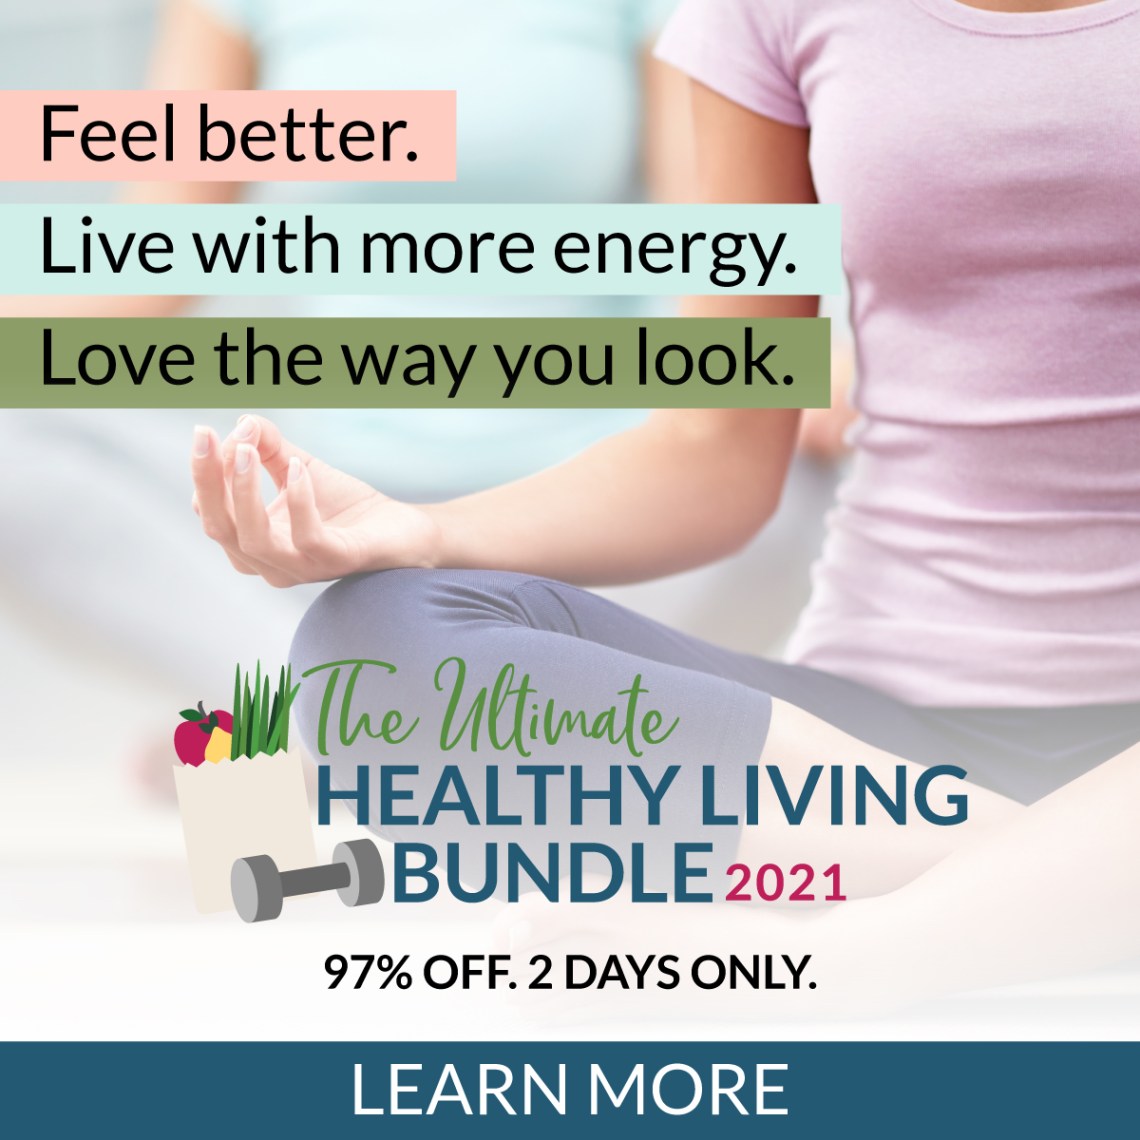 Ultimate Healthy Living Bundle 2021